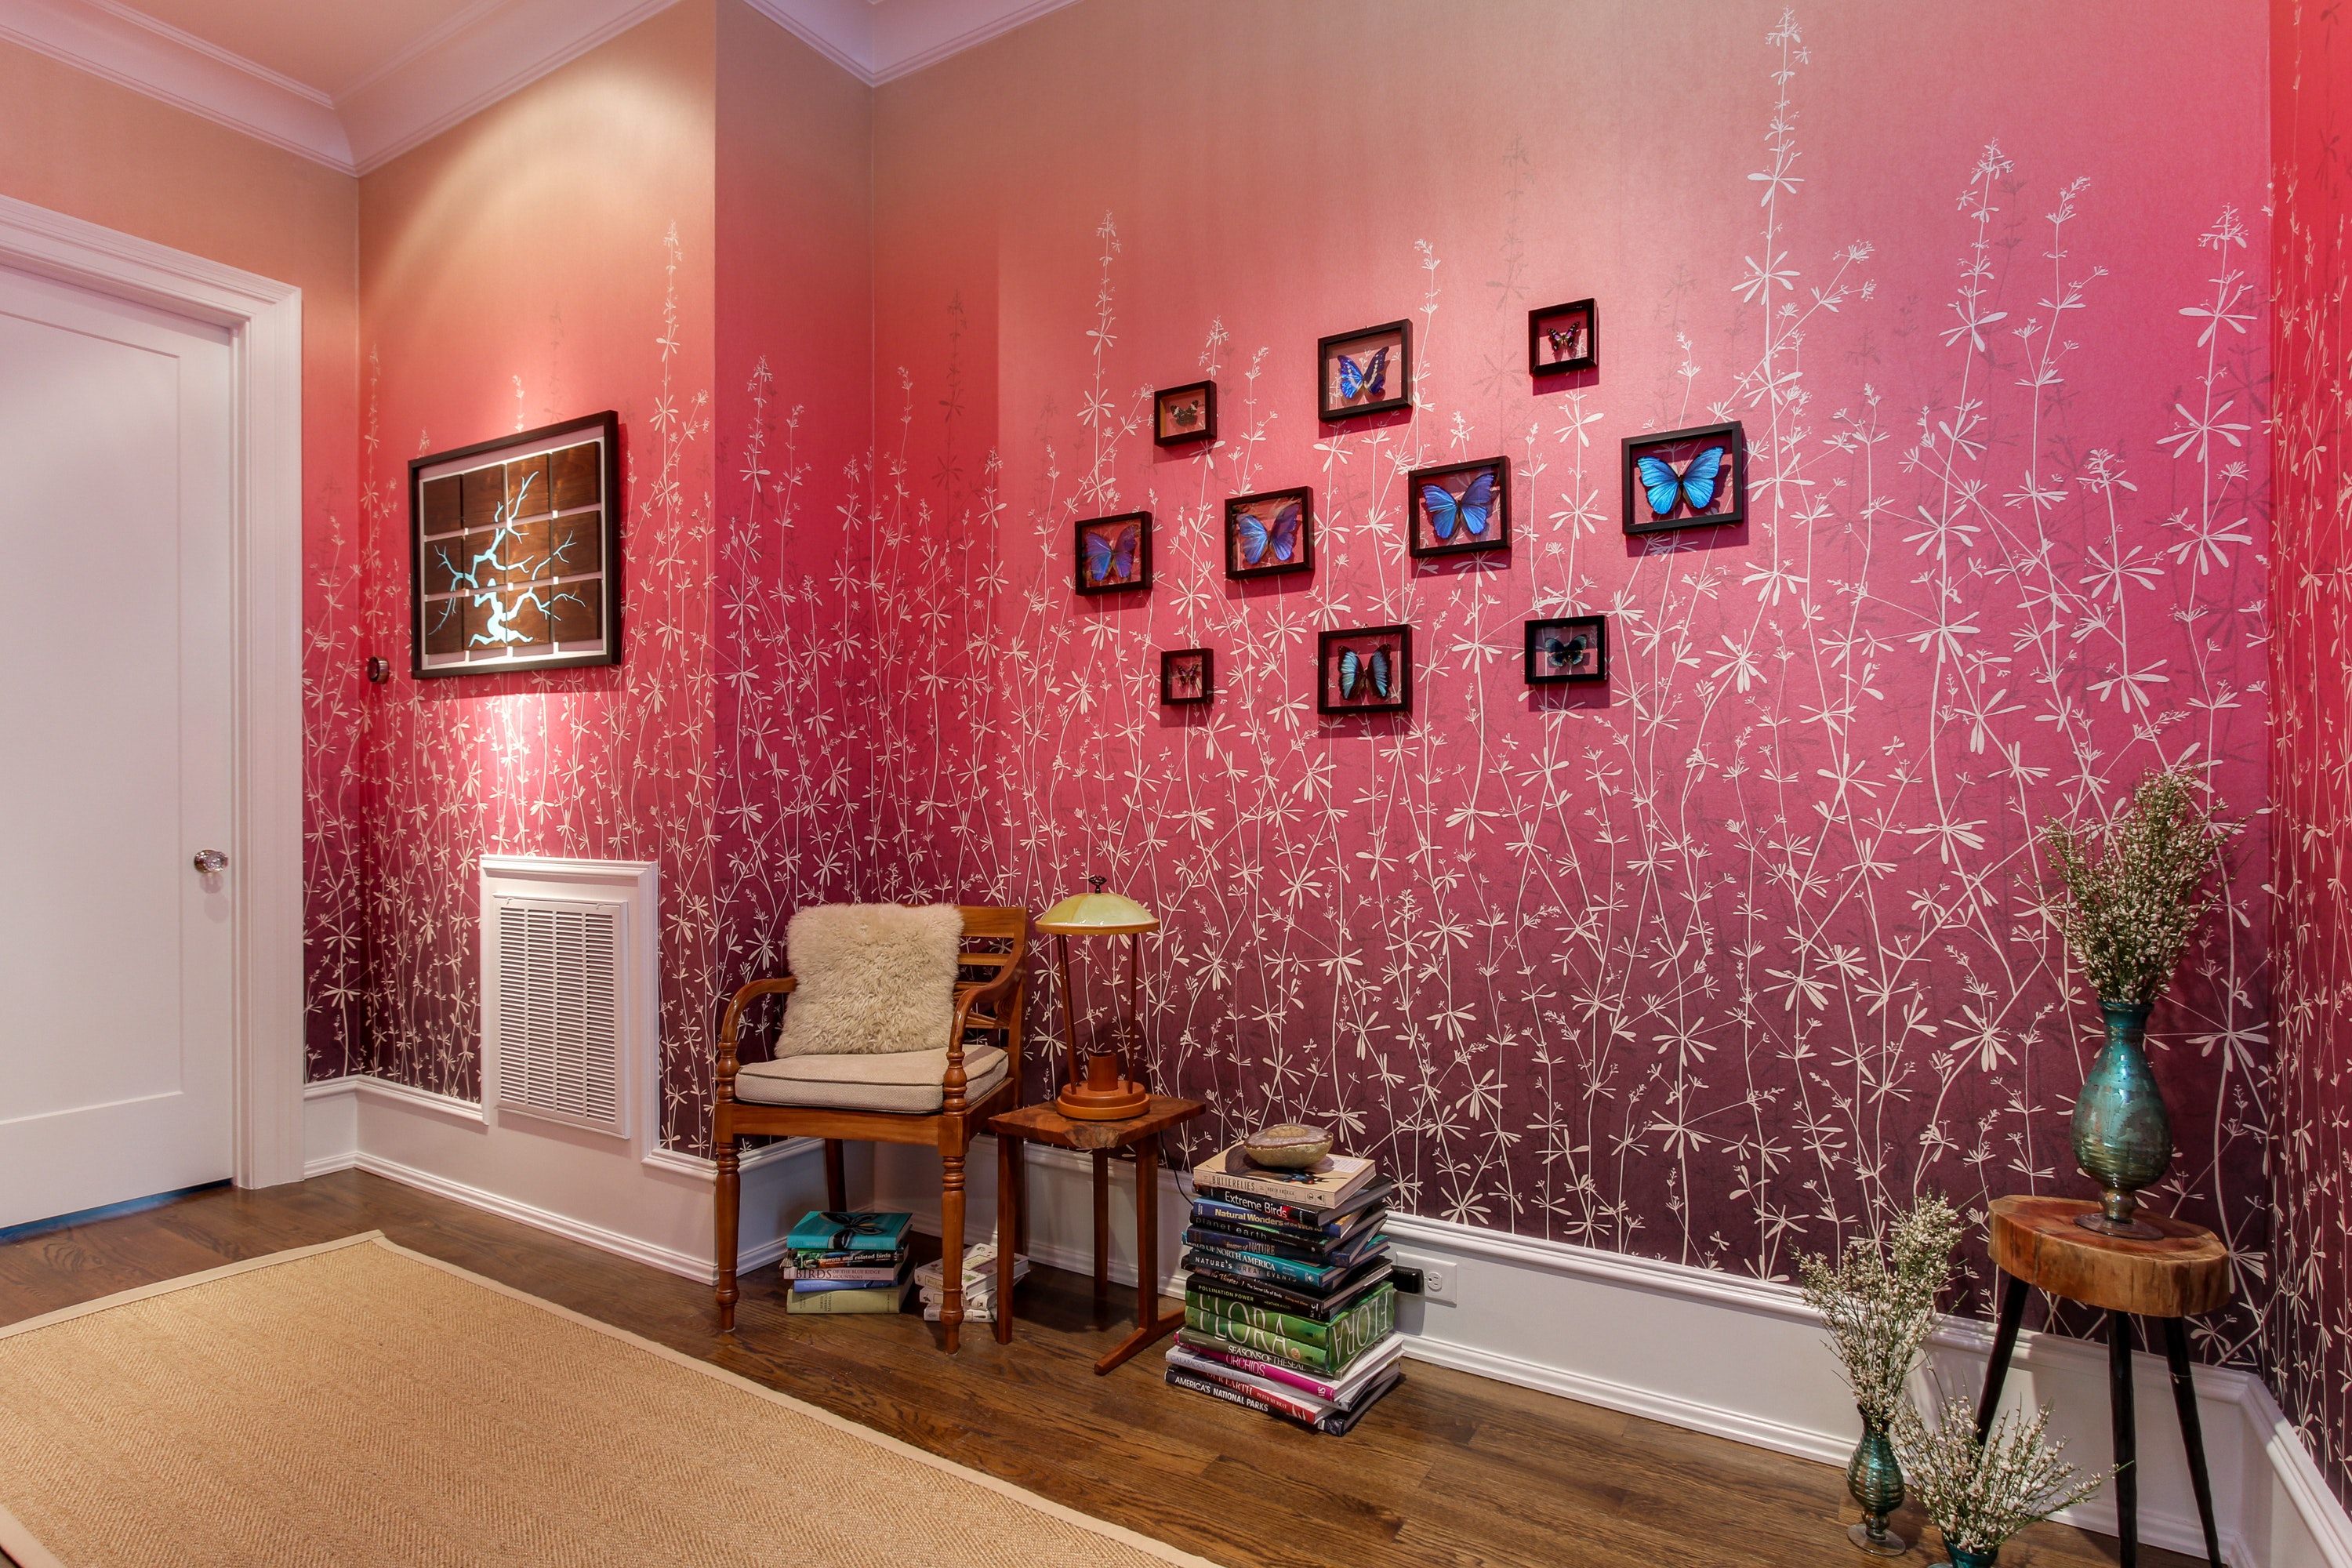 Wood Furniture In Pink Wall - HD Wallpaper 